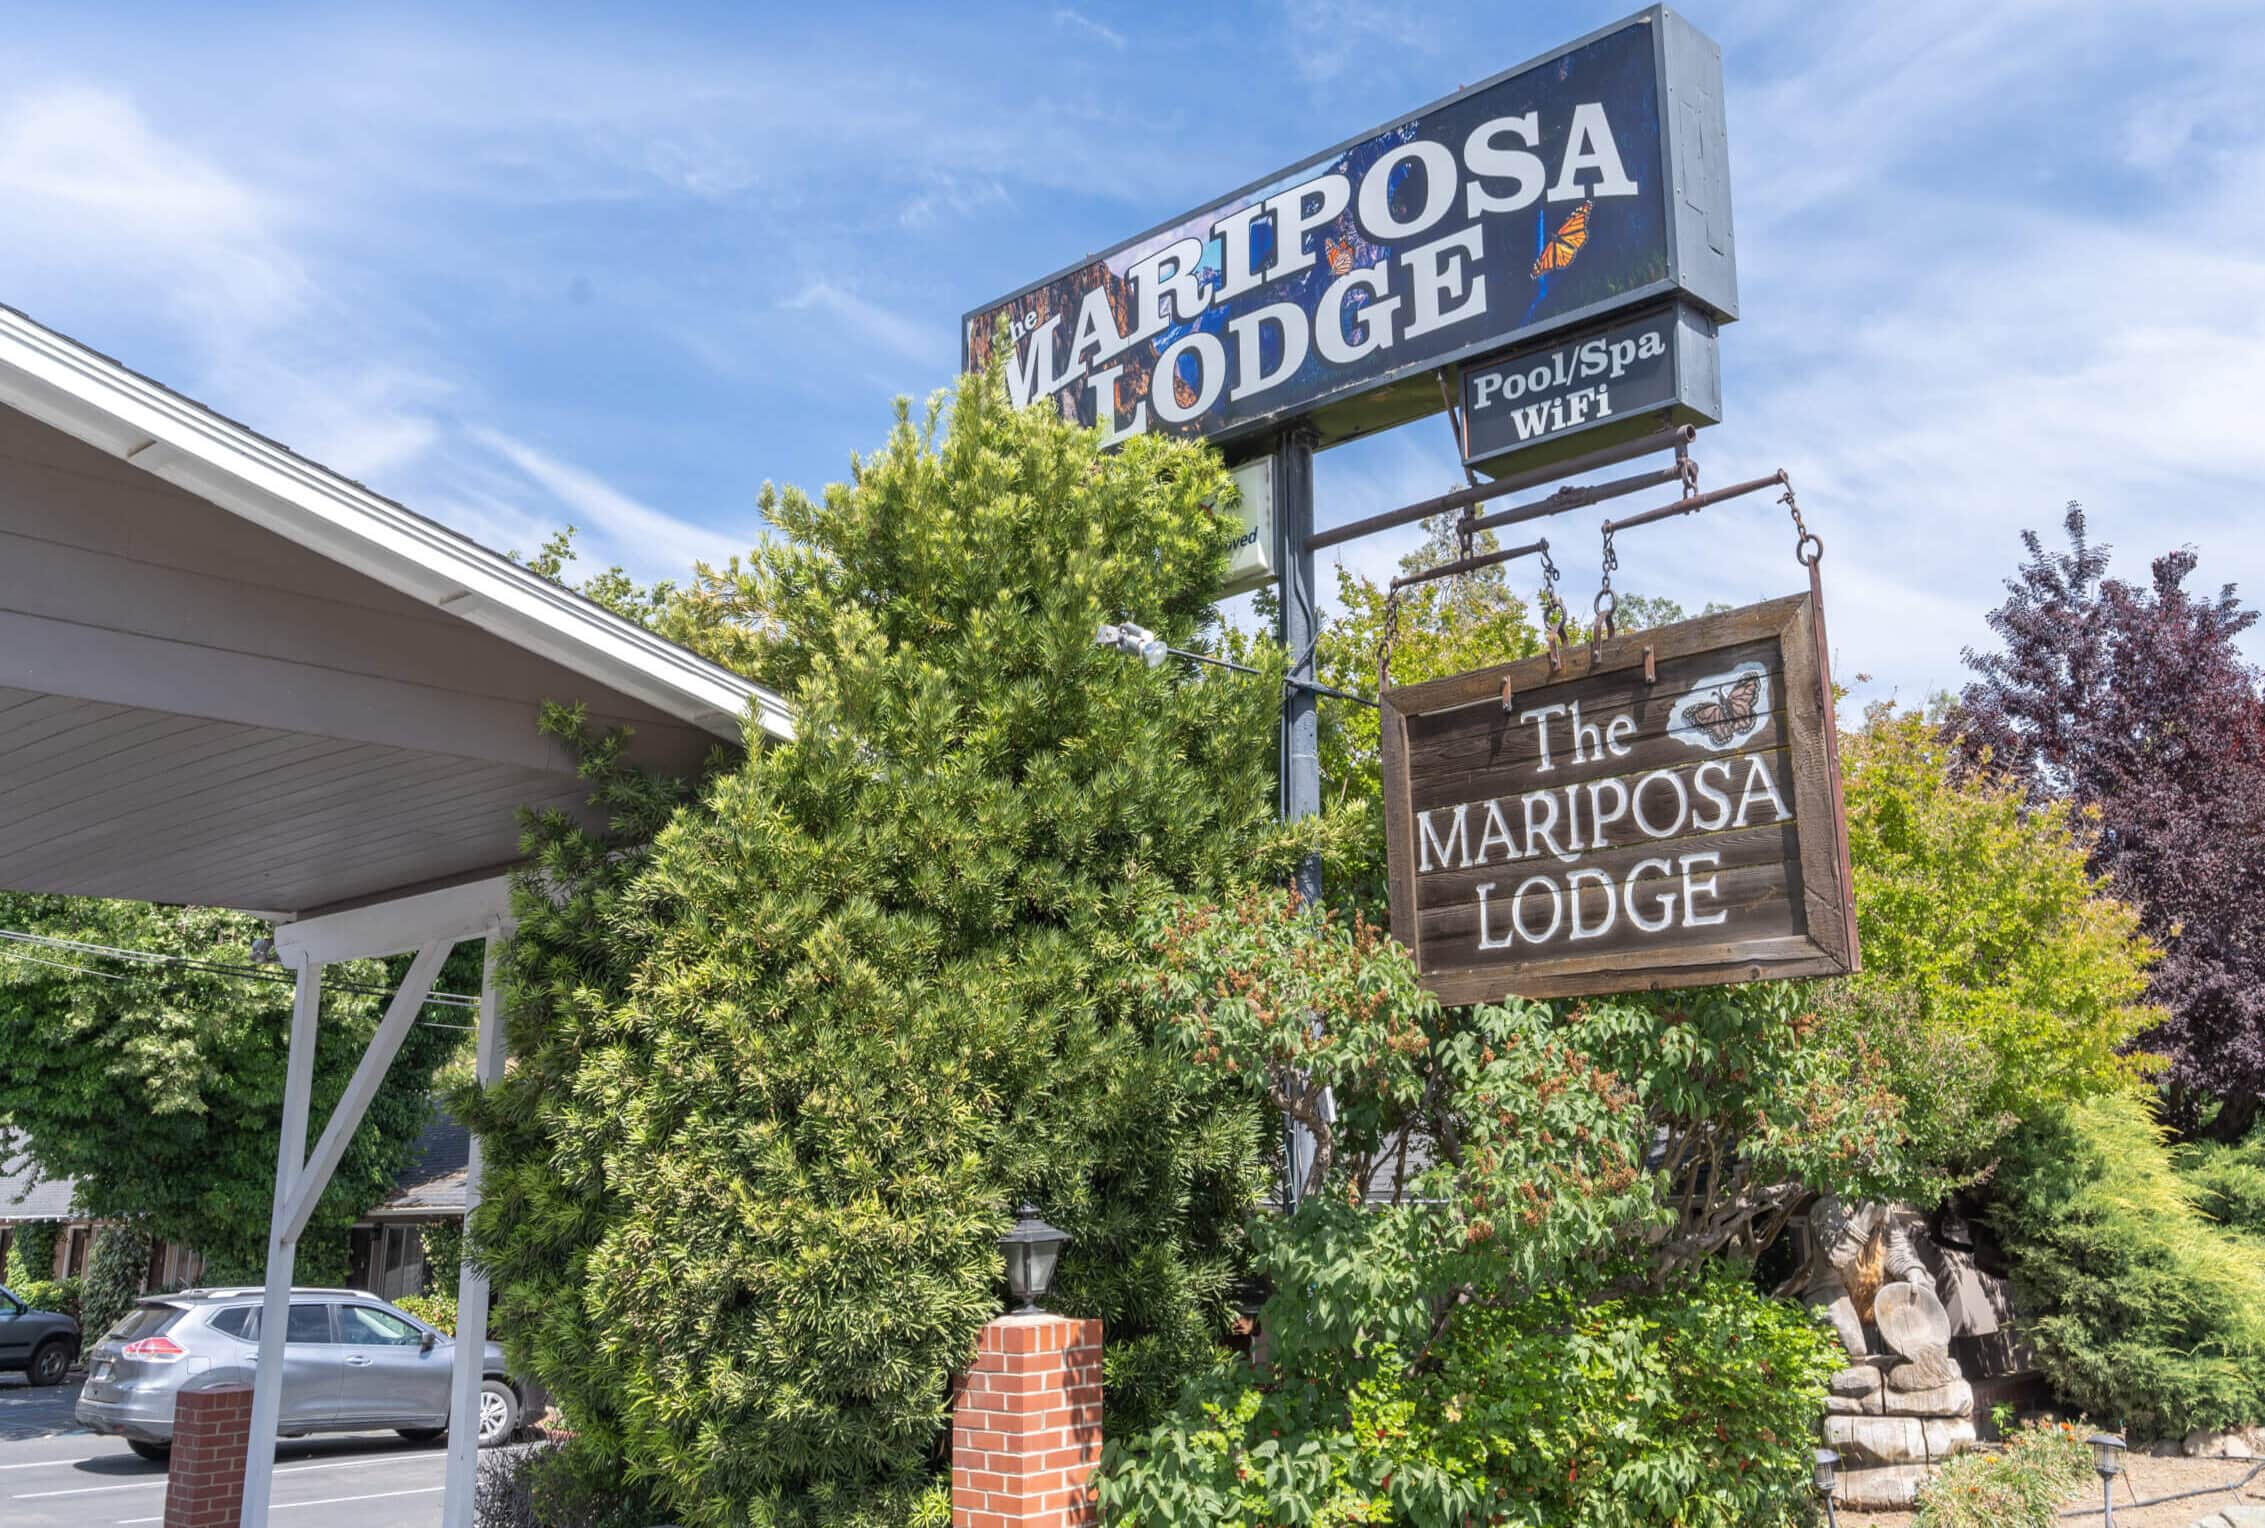 The Mariposa Lodge